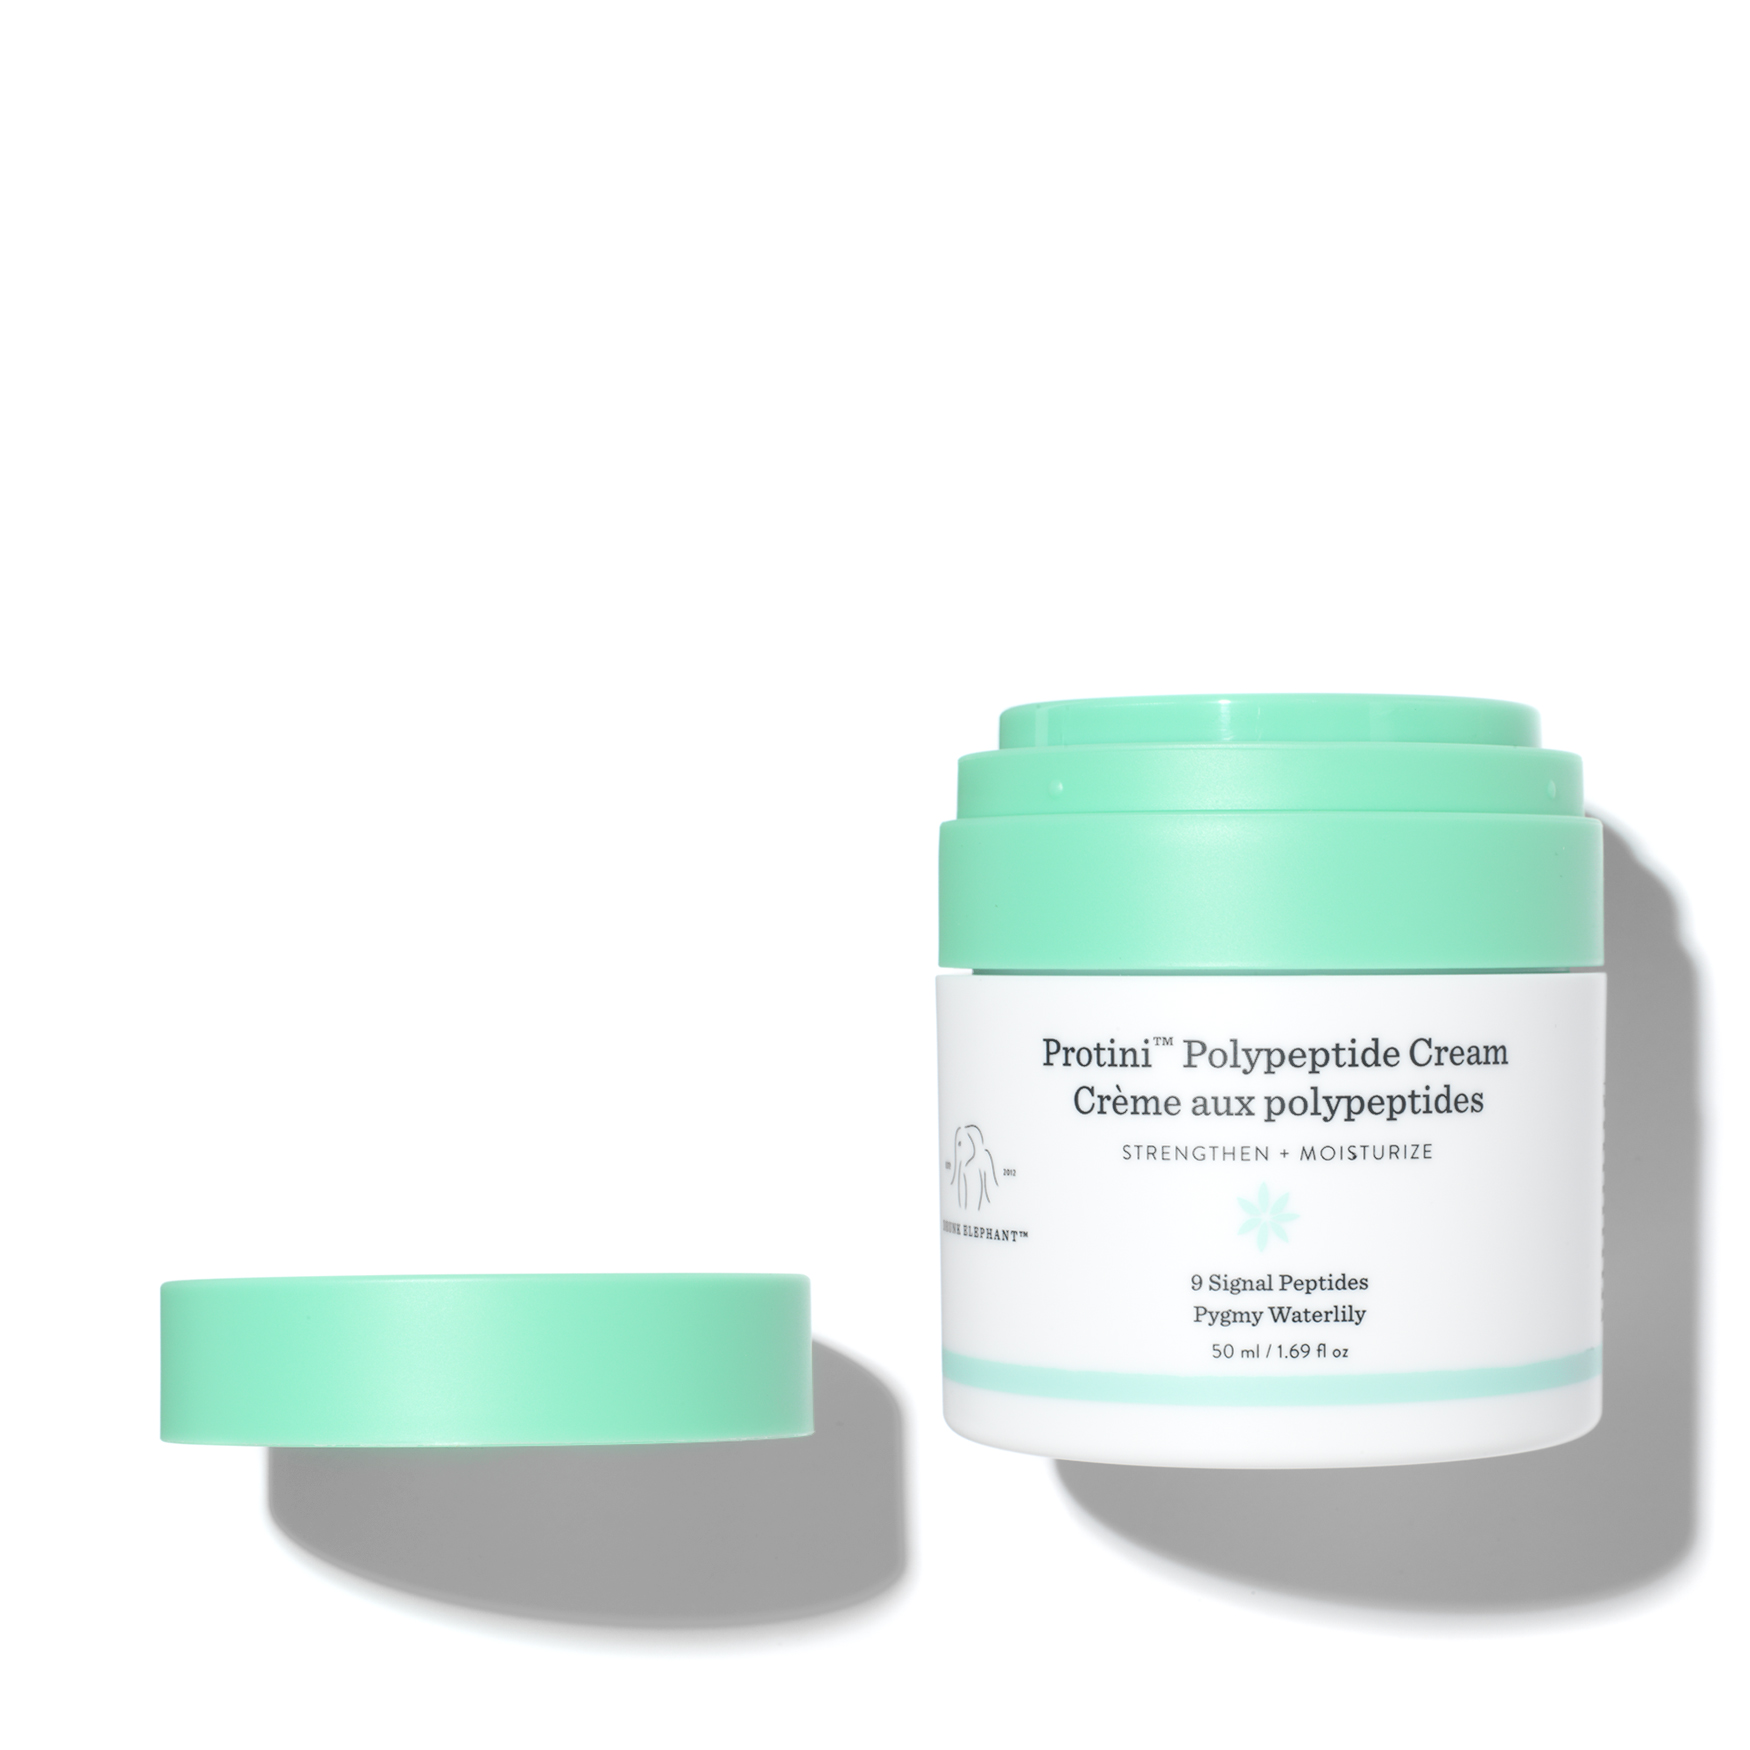  Drunk Elephant Protini Polypeptide Cream for Unisex - 1.69 oz  Cream : Beauty & Personal Care